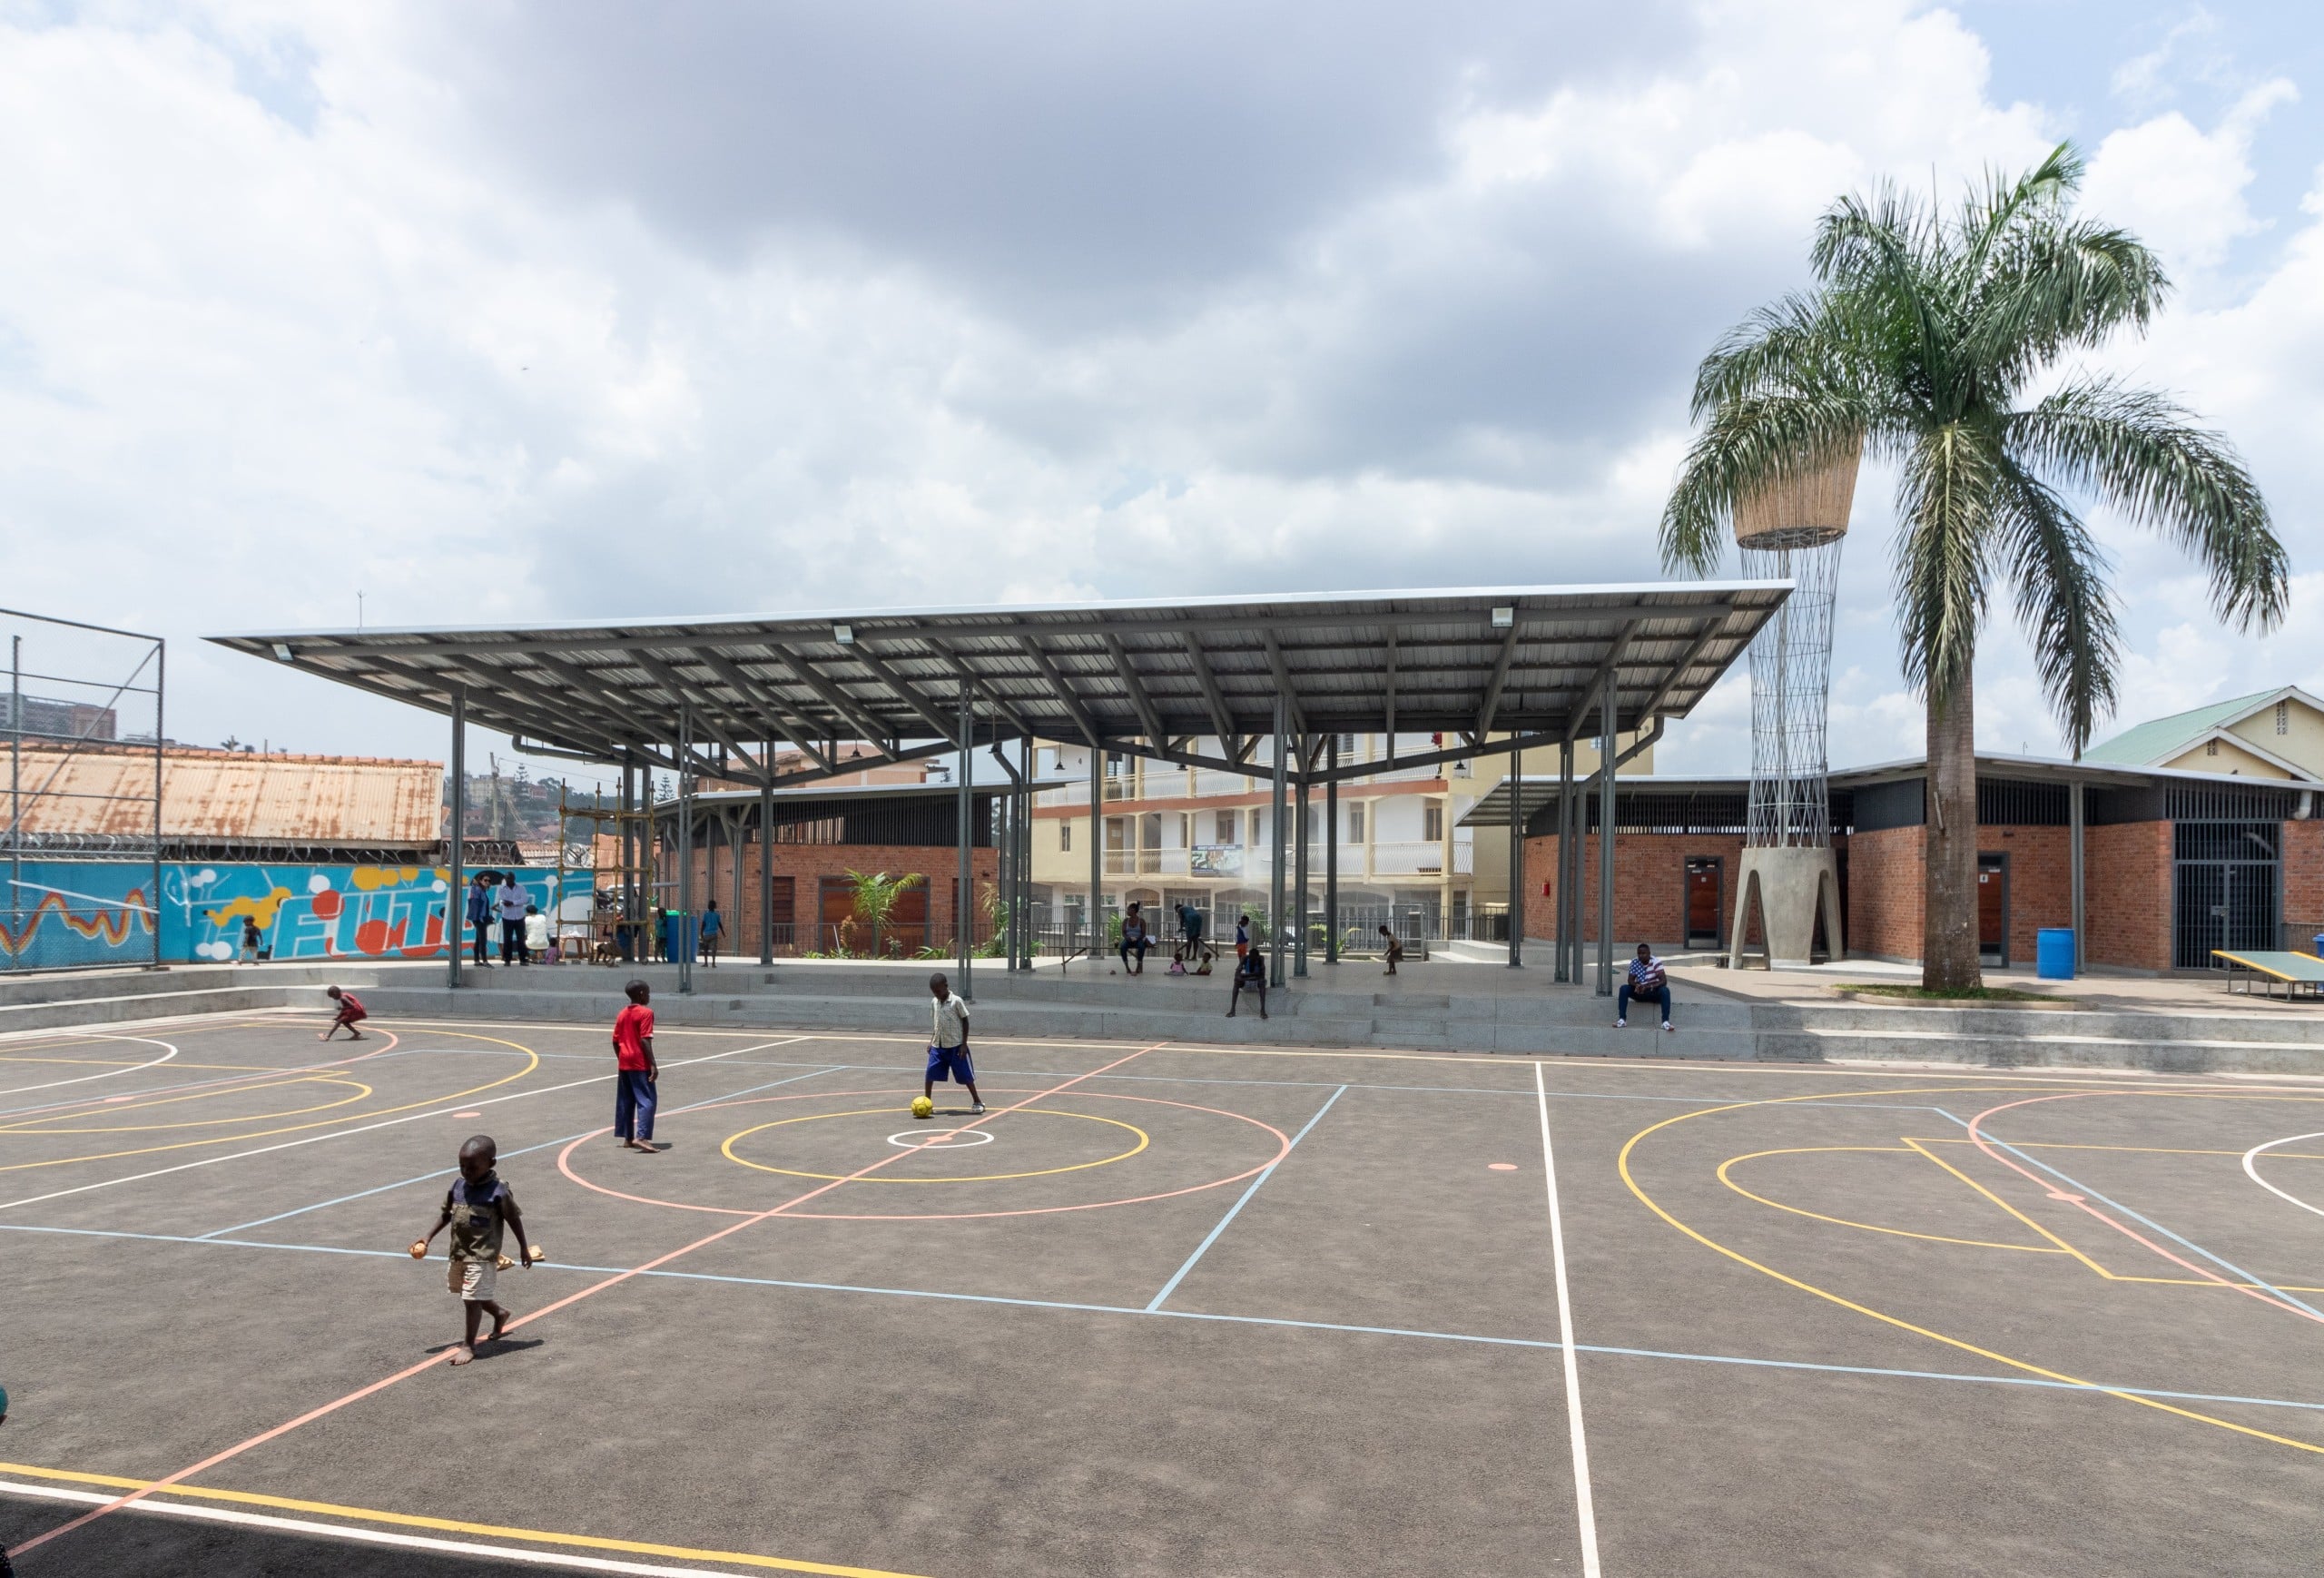 Der Pritzker-Preisträger Diébédo Francis Kéré hat ein Gemeinschaftszentrum in der Hauptstadt Kampala, Uganda errichtet. Alles über das Projekt hier. Foto: Kéré Architecture